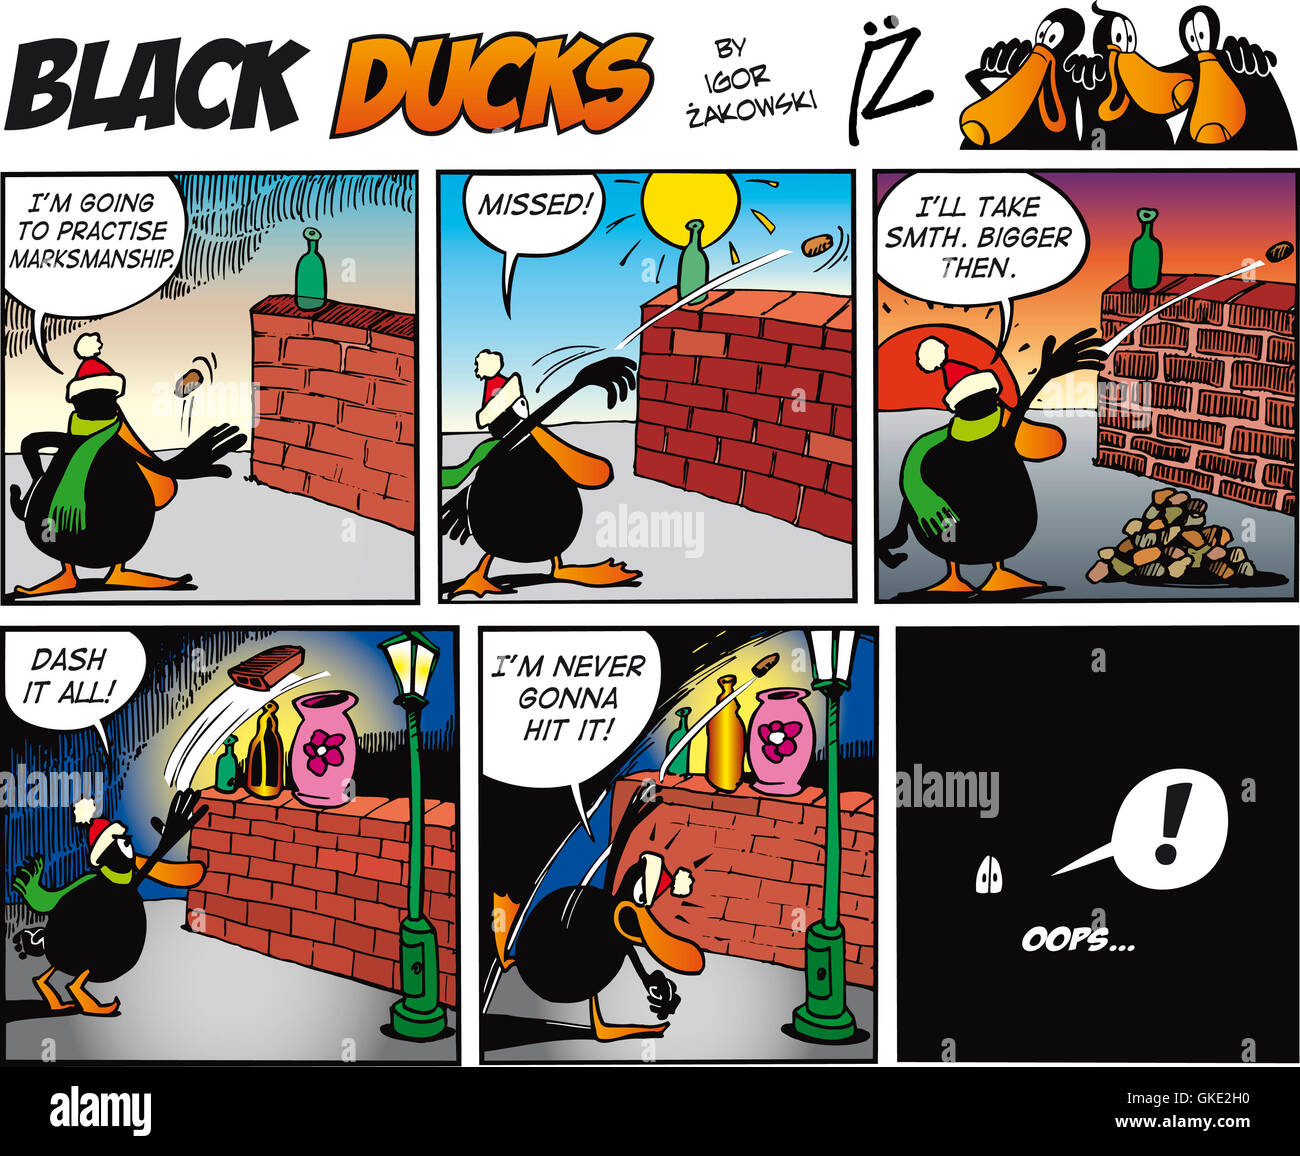 Black Ducks Comics episode 68 Stock Photo